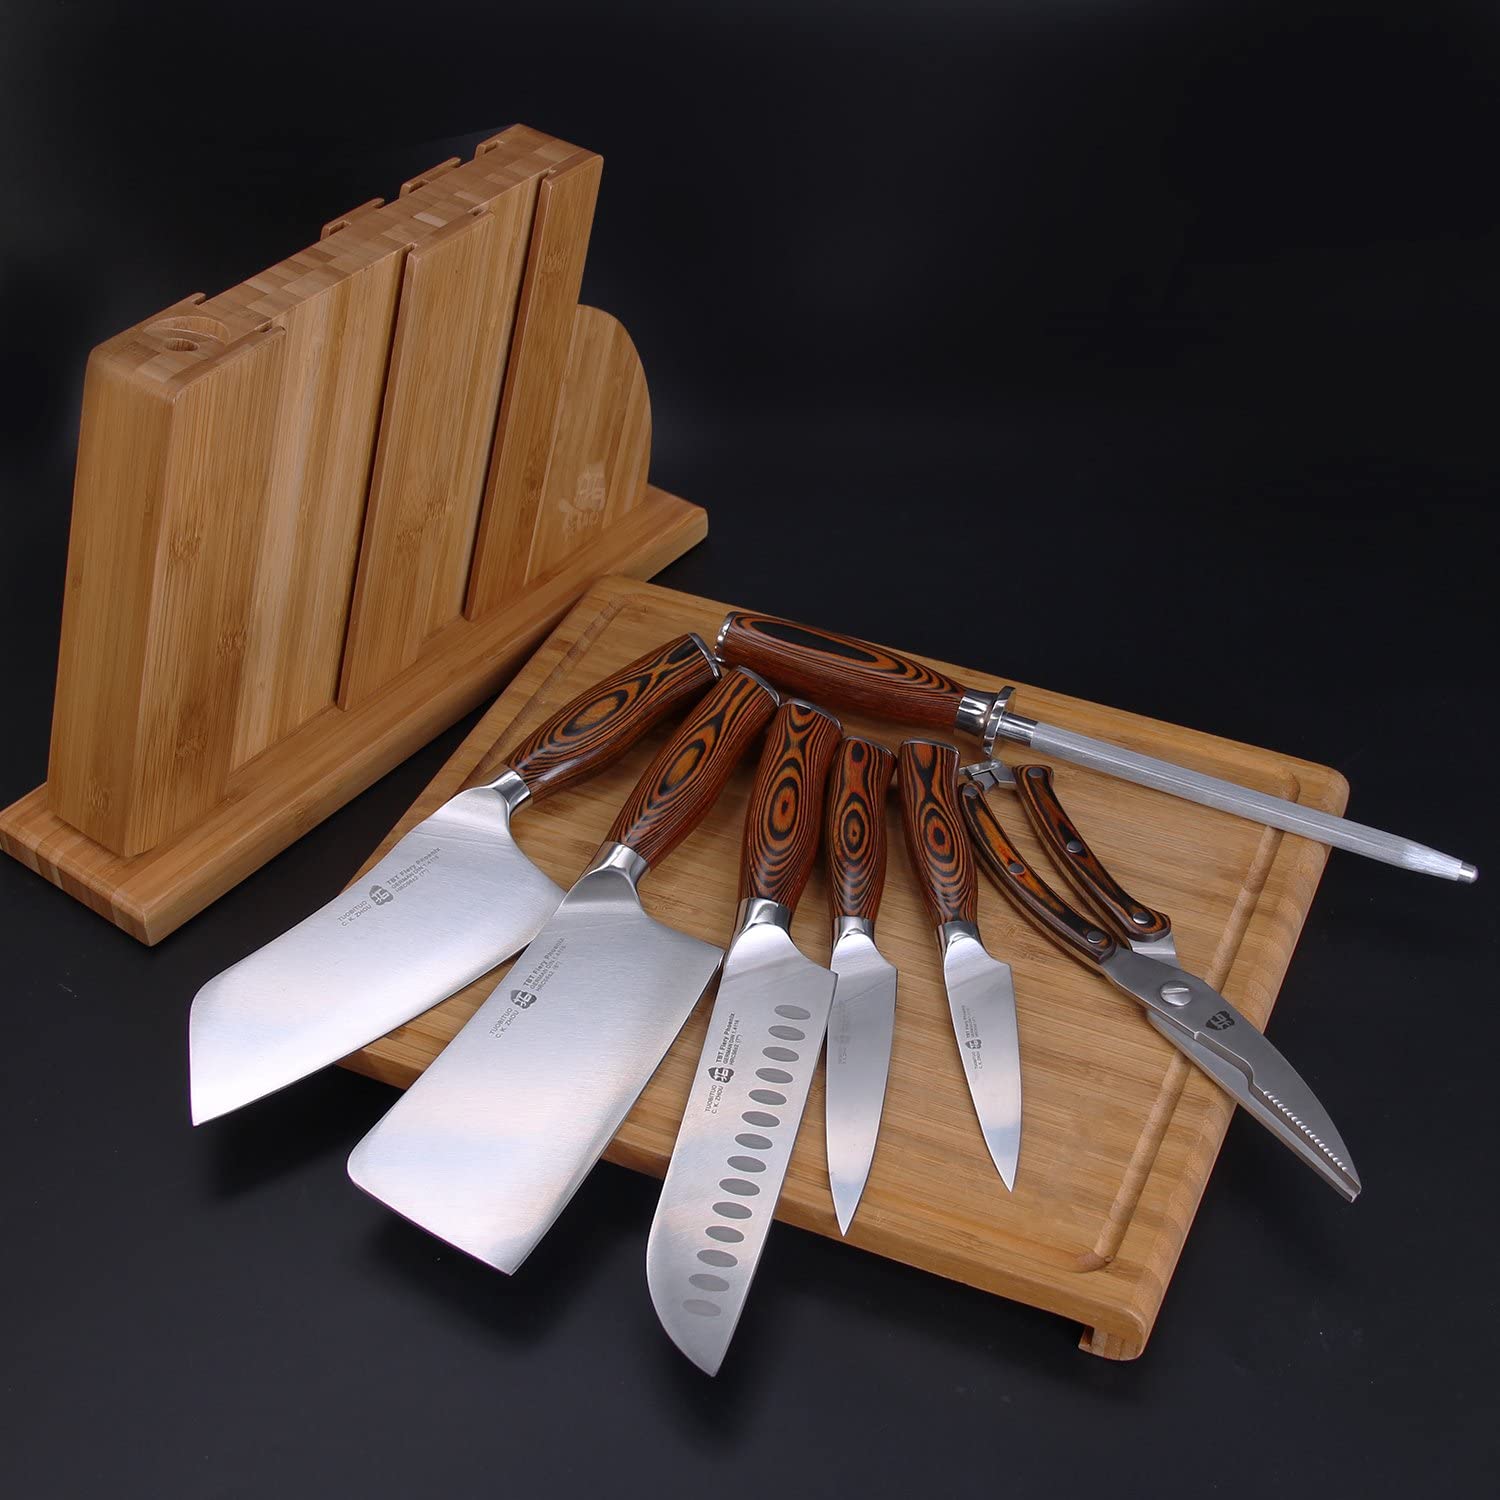 TUO Knife Block Set - 7 piece Kitchen Knife Set with Wooden Block, Kitchen  Ch